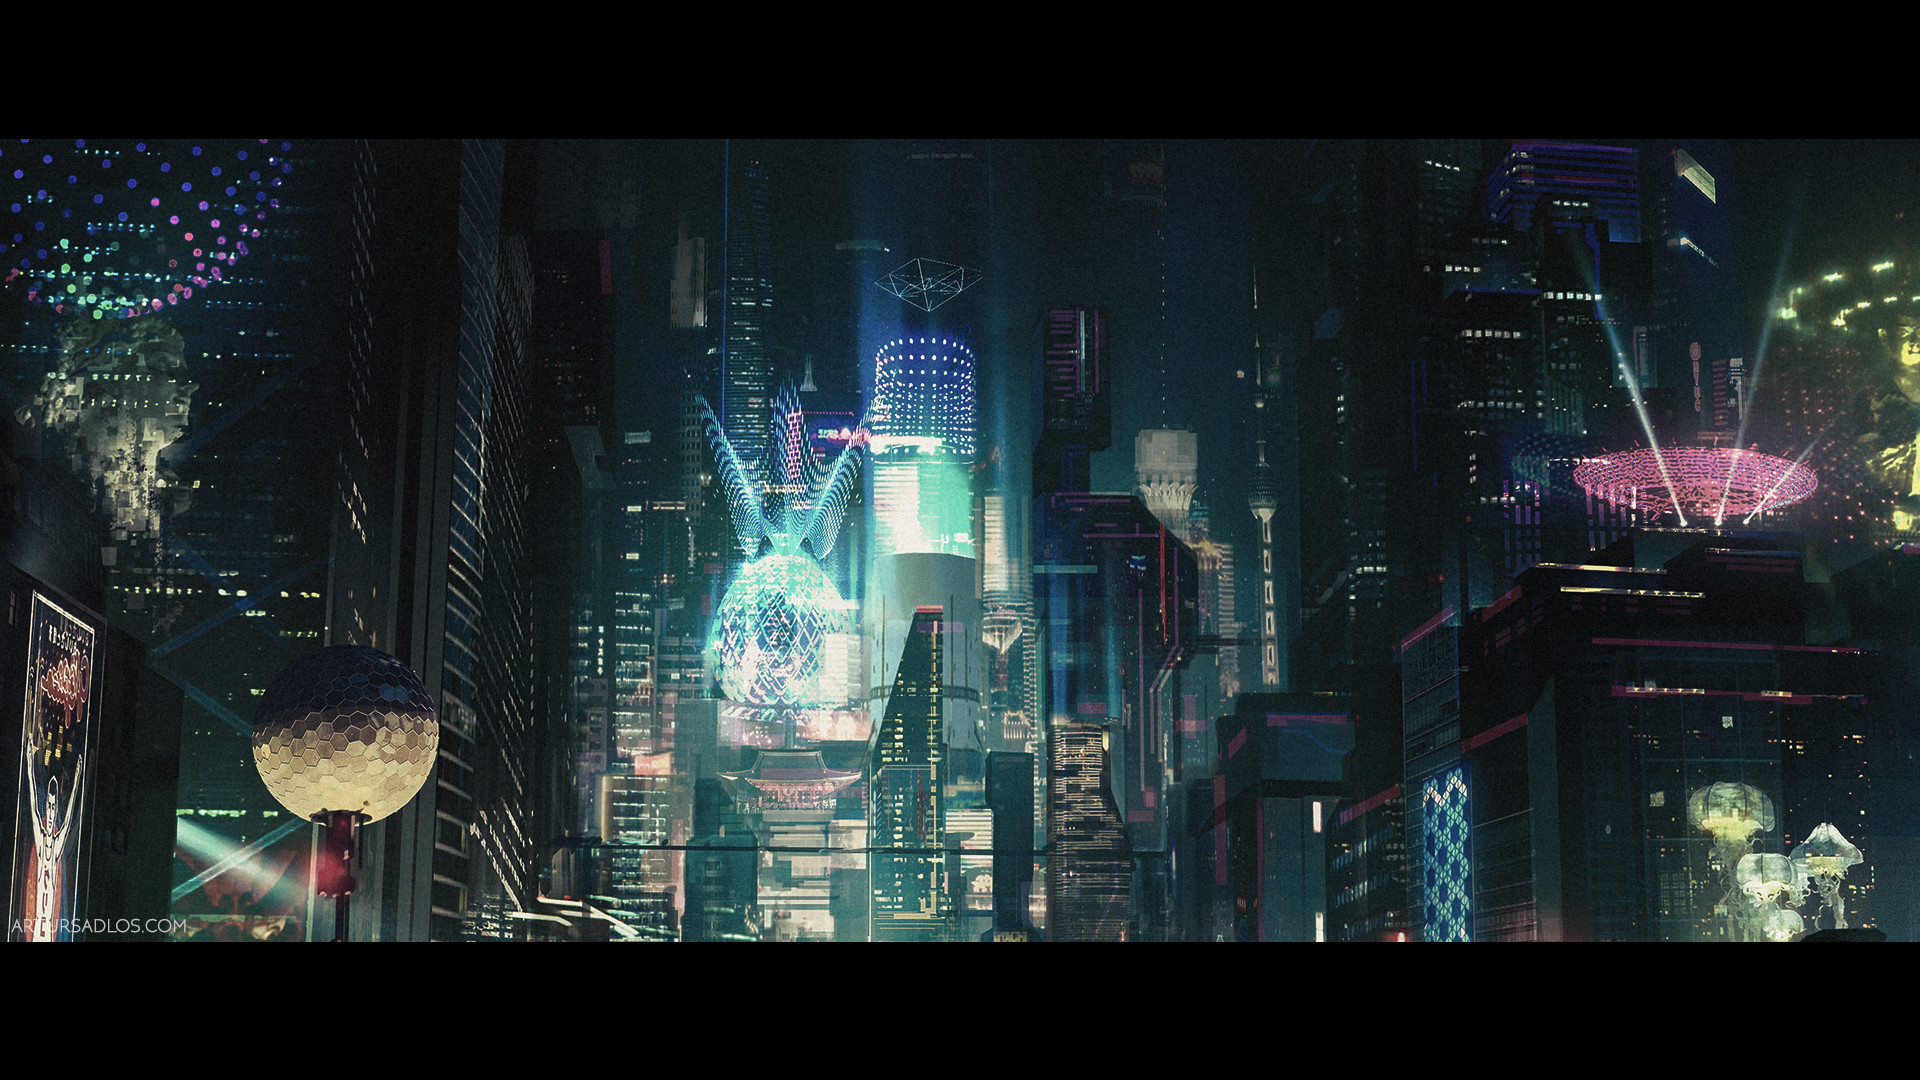 ArtStation - Cyberpunk City Landscape